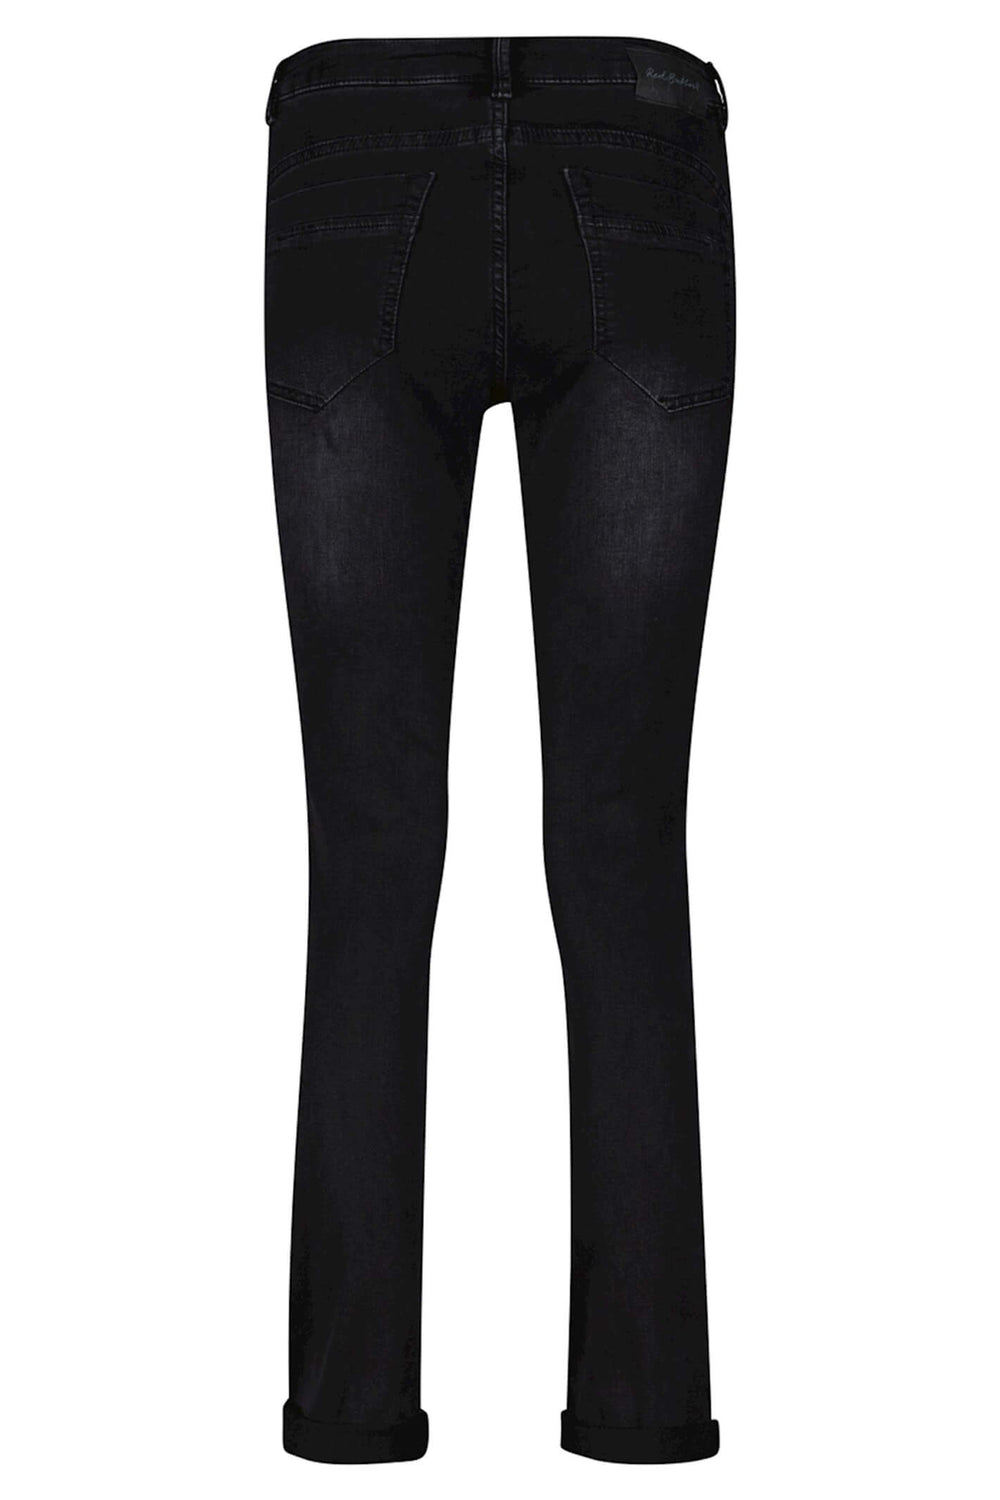 Red Button SRB3087 Sienna Black Jog Trousers - Olivia Grace Fashion